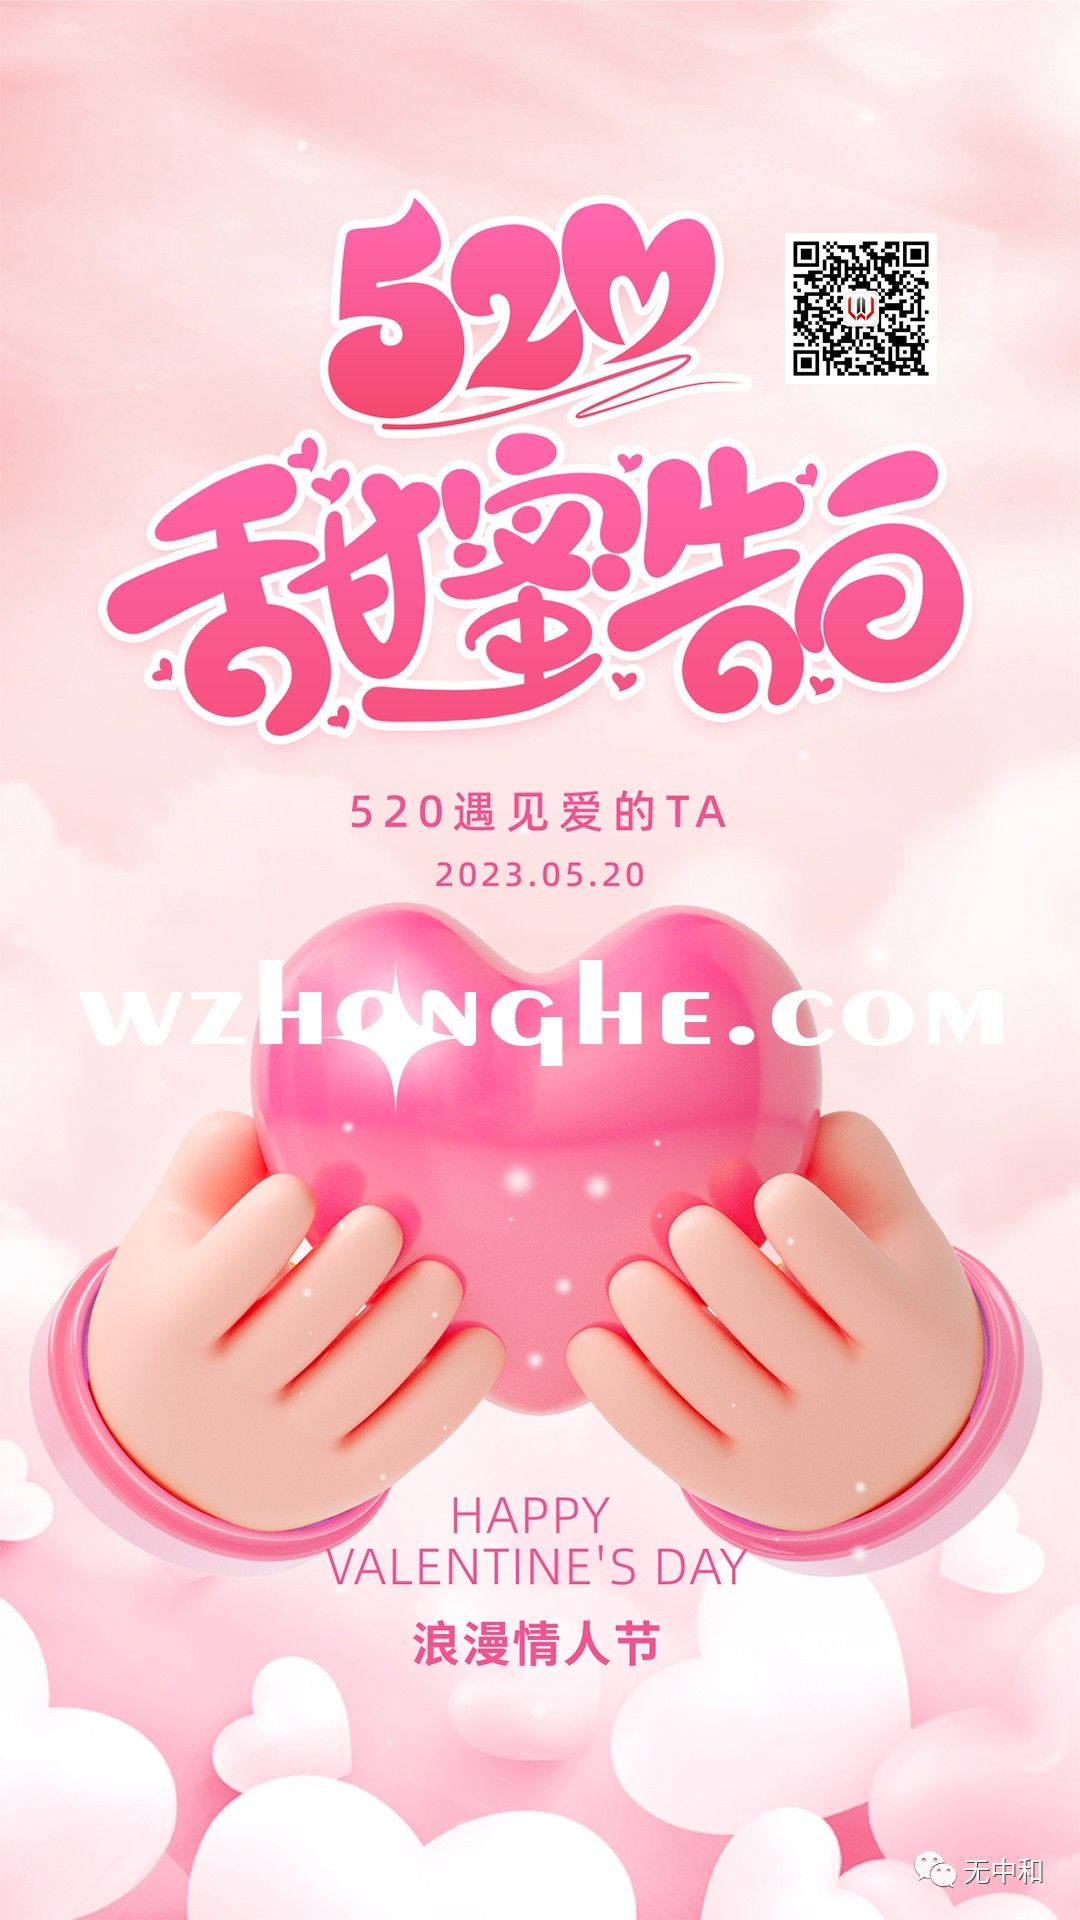 520 - 无中和wzhonghe.com -1